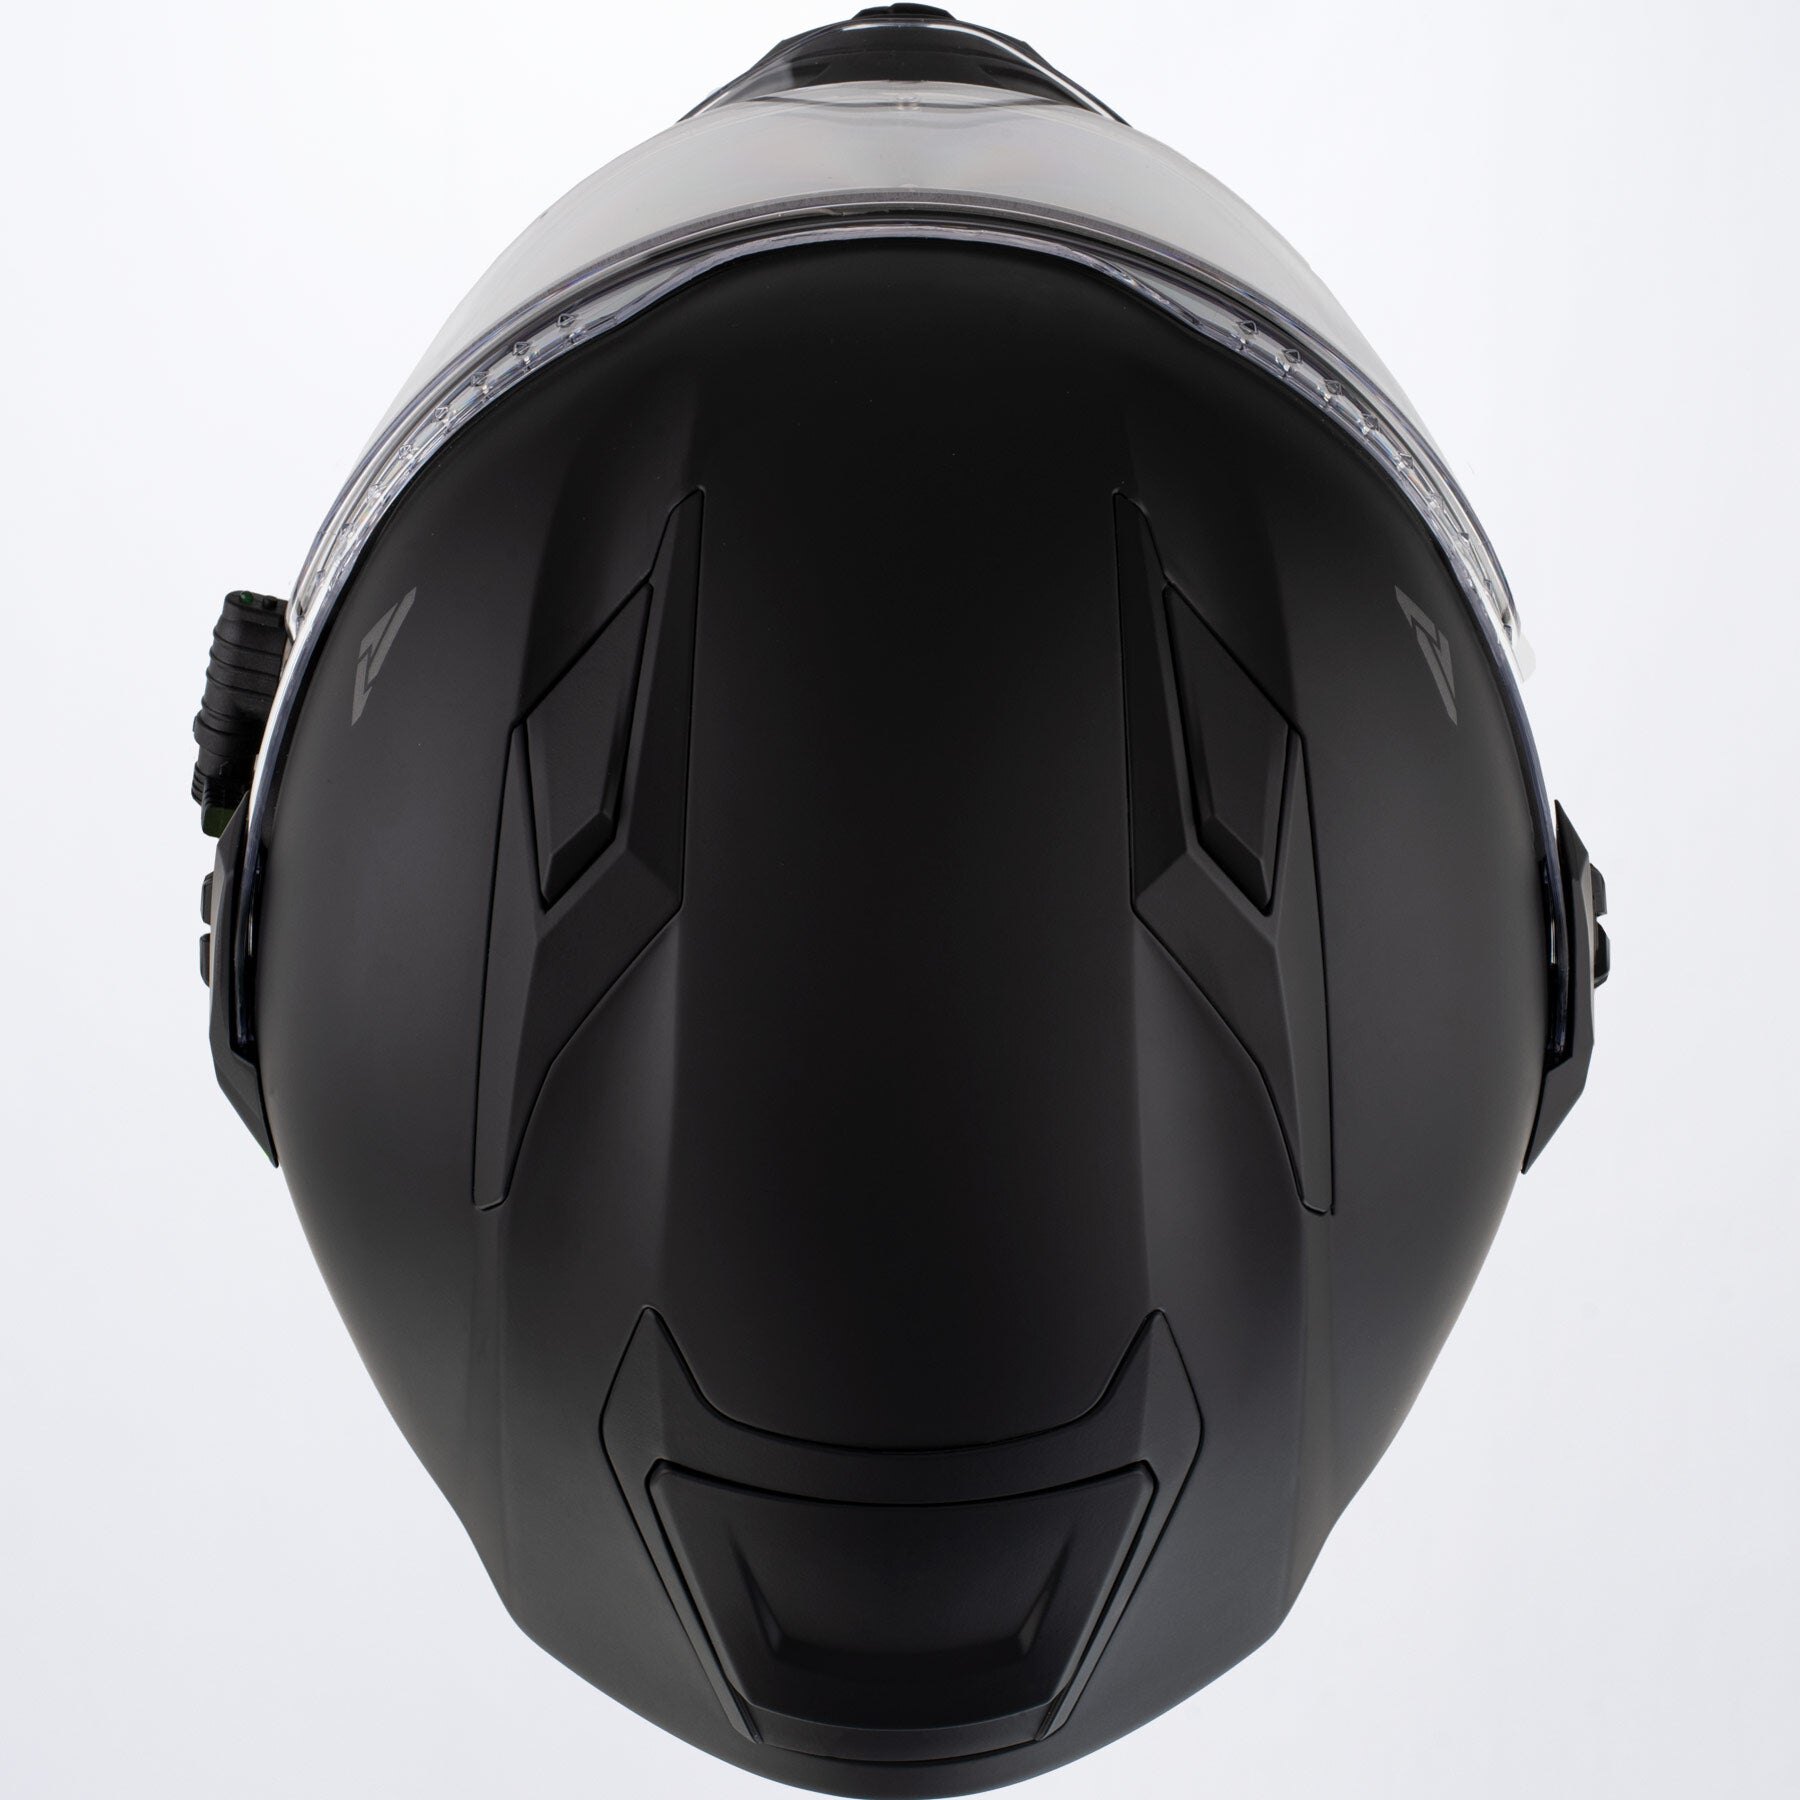 Maverick Speed Helmet S Black Ops